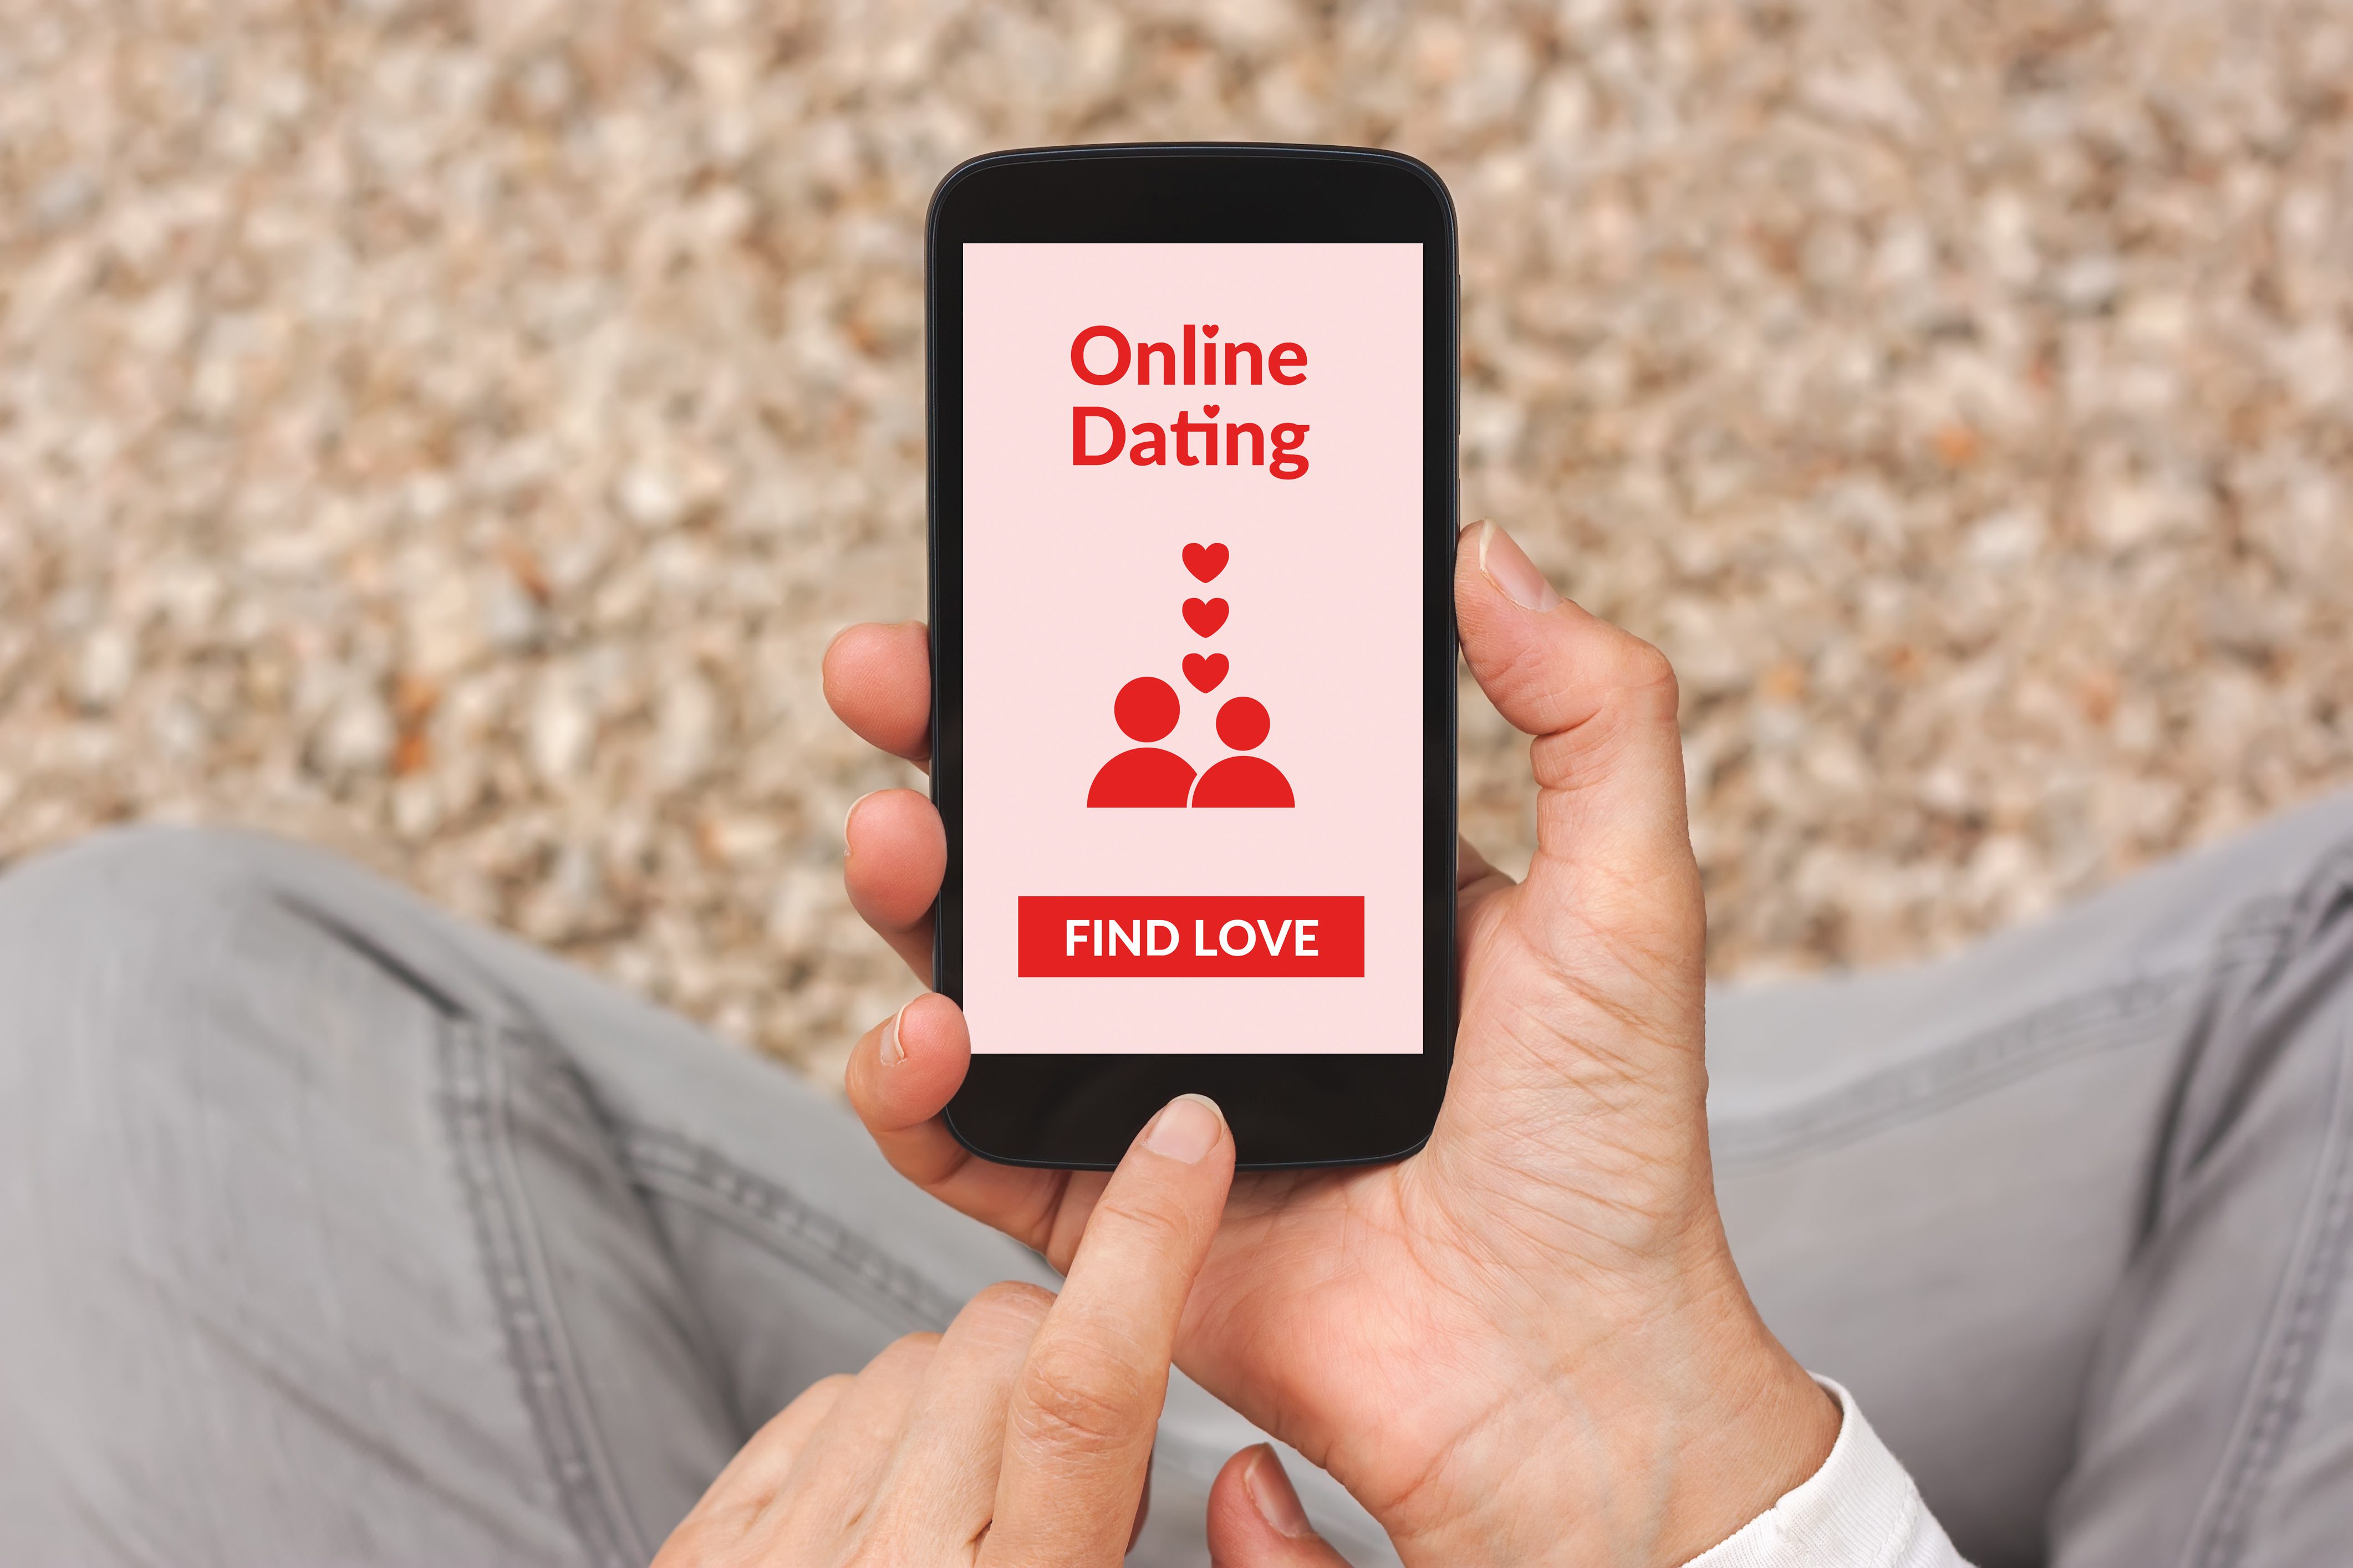 Online Dating: Zero Matches?